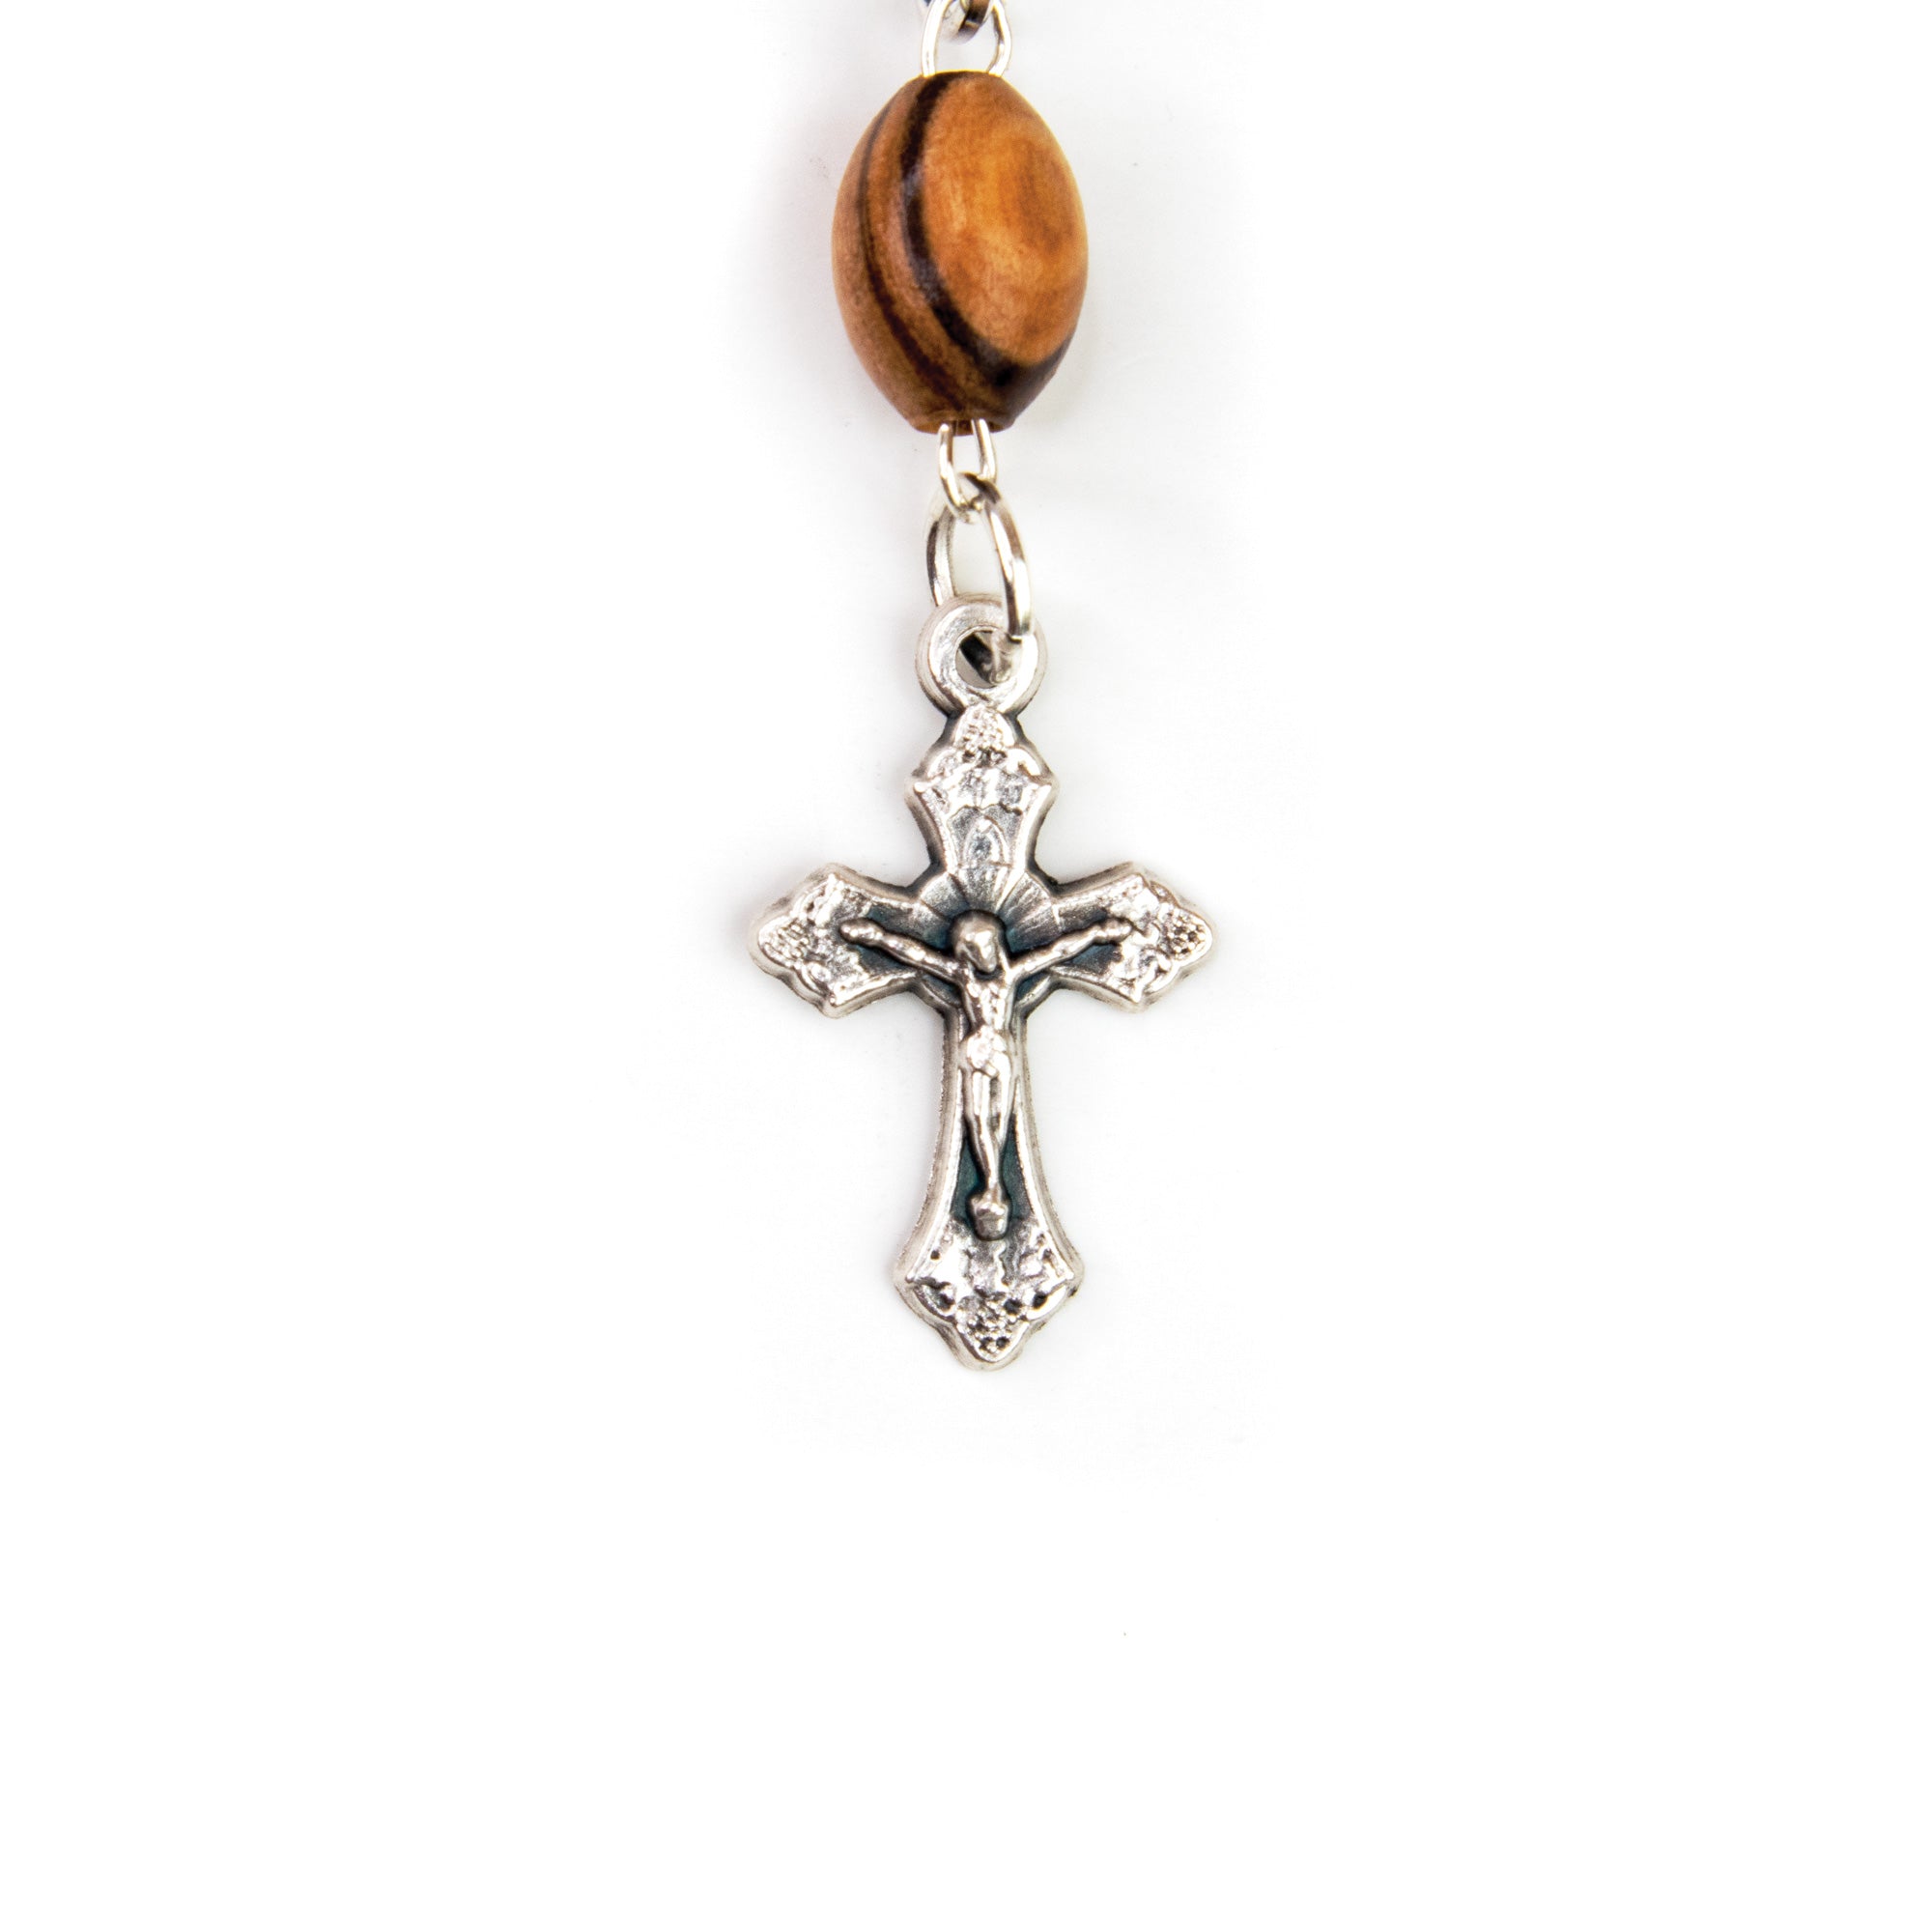 Divine Mercy Jesus (Close Up), Holy Land Olive Wood Pocket Auto Rosary, Made in Bethlehem